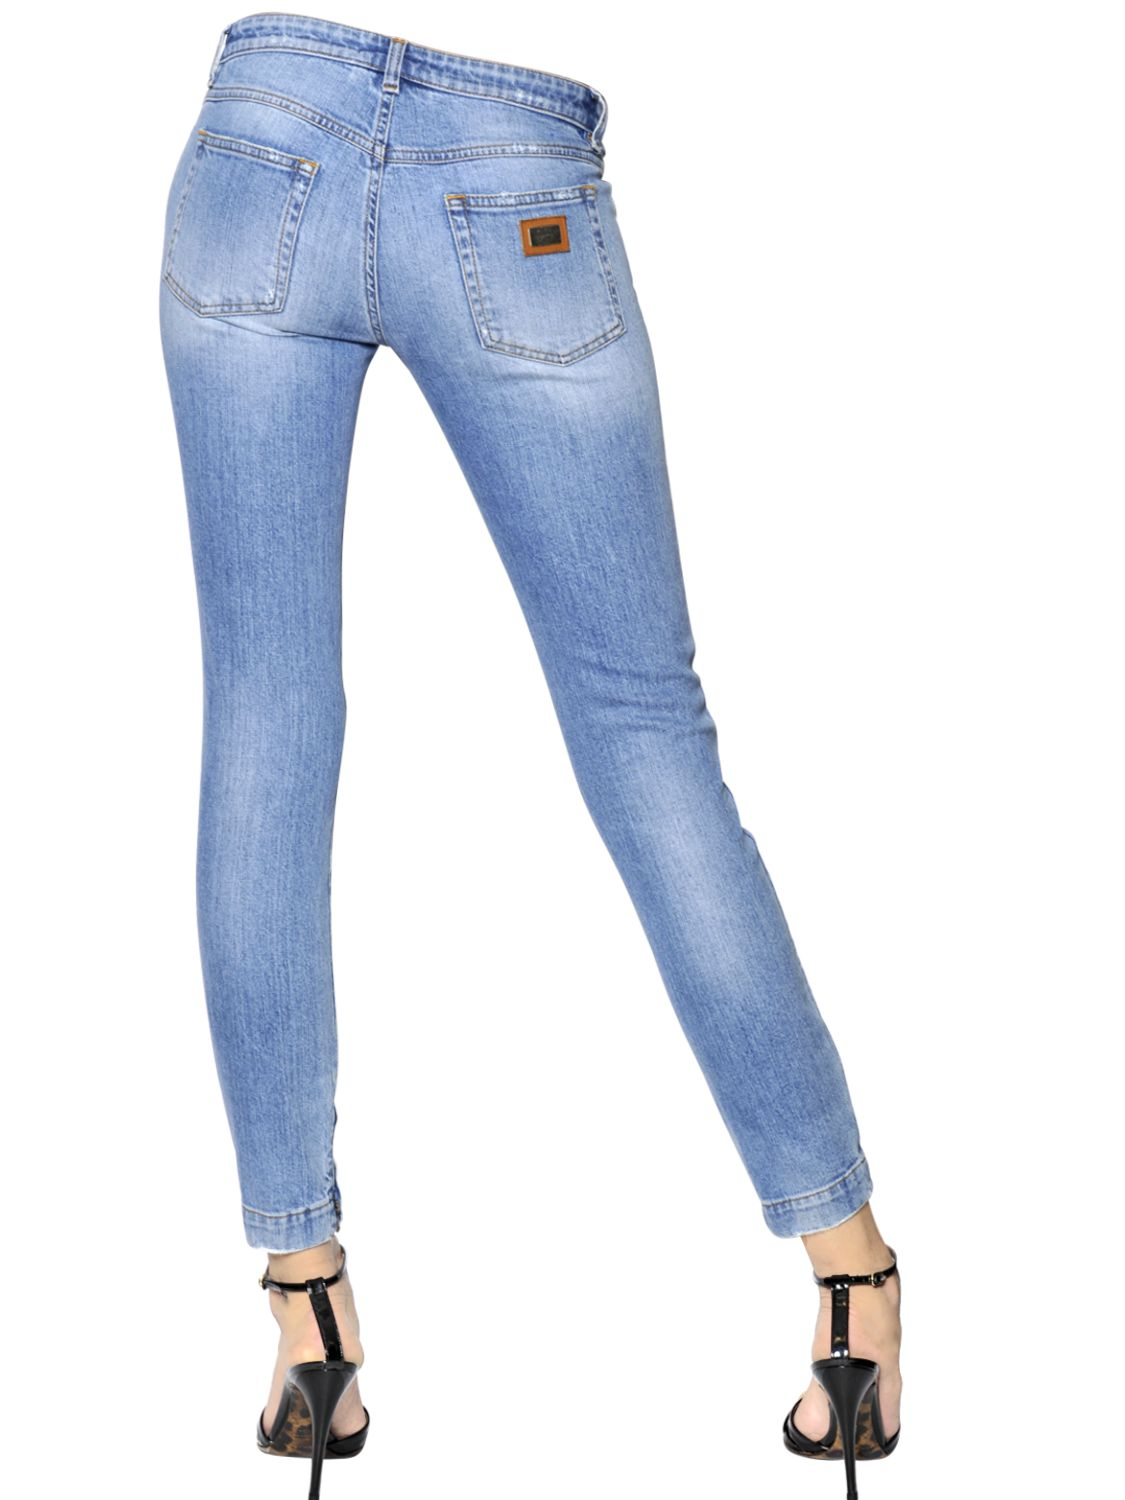 Dolce & Gabbana Stretch Washed Cotton Denim Jeans in Light Blue (Blue) -  Lyst